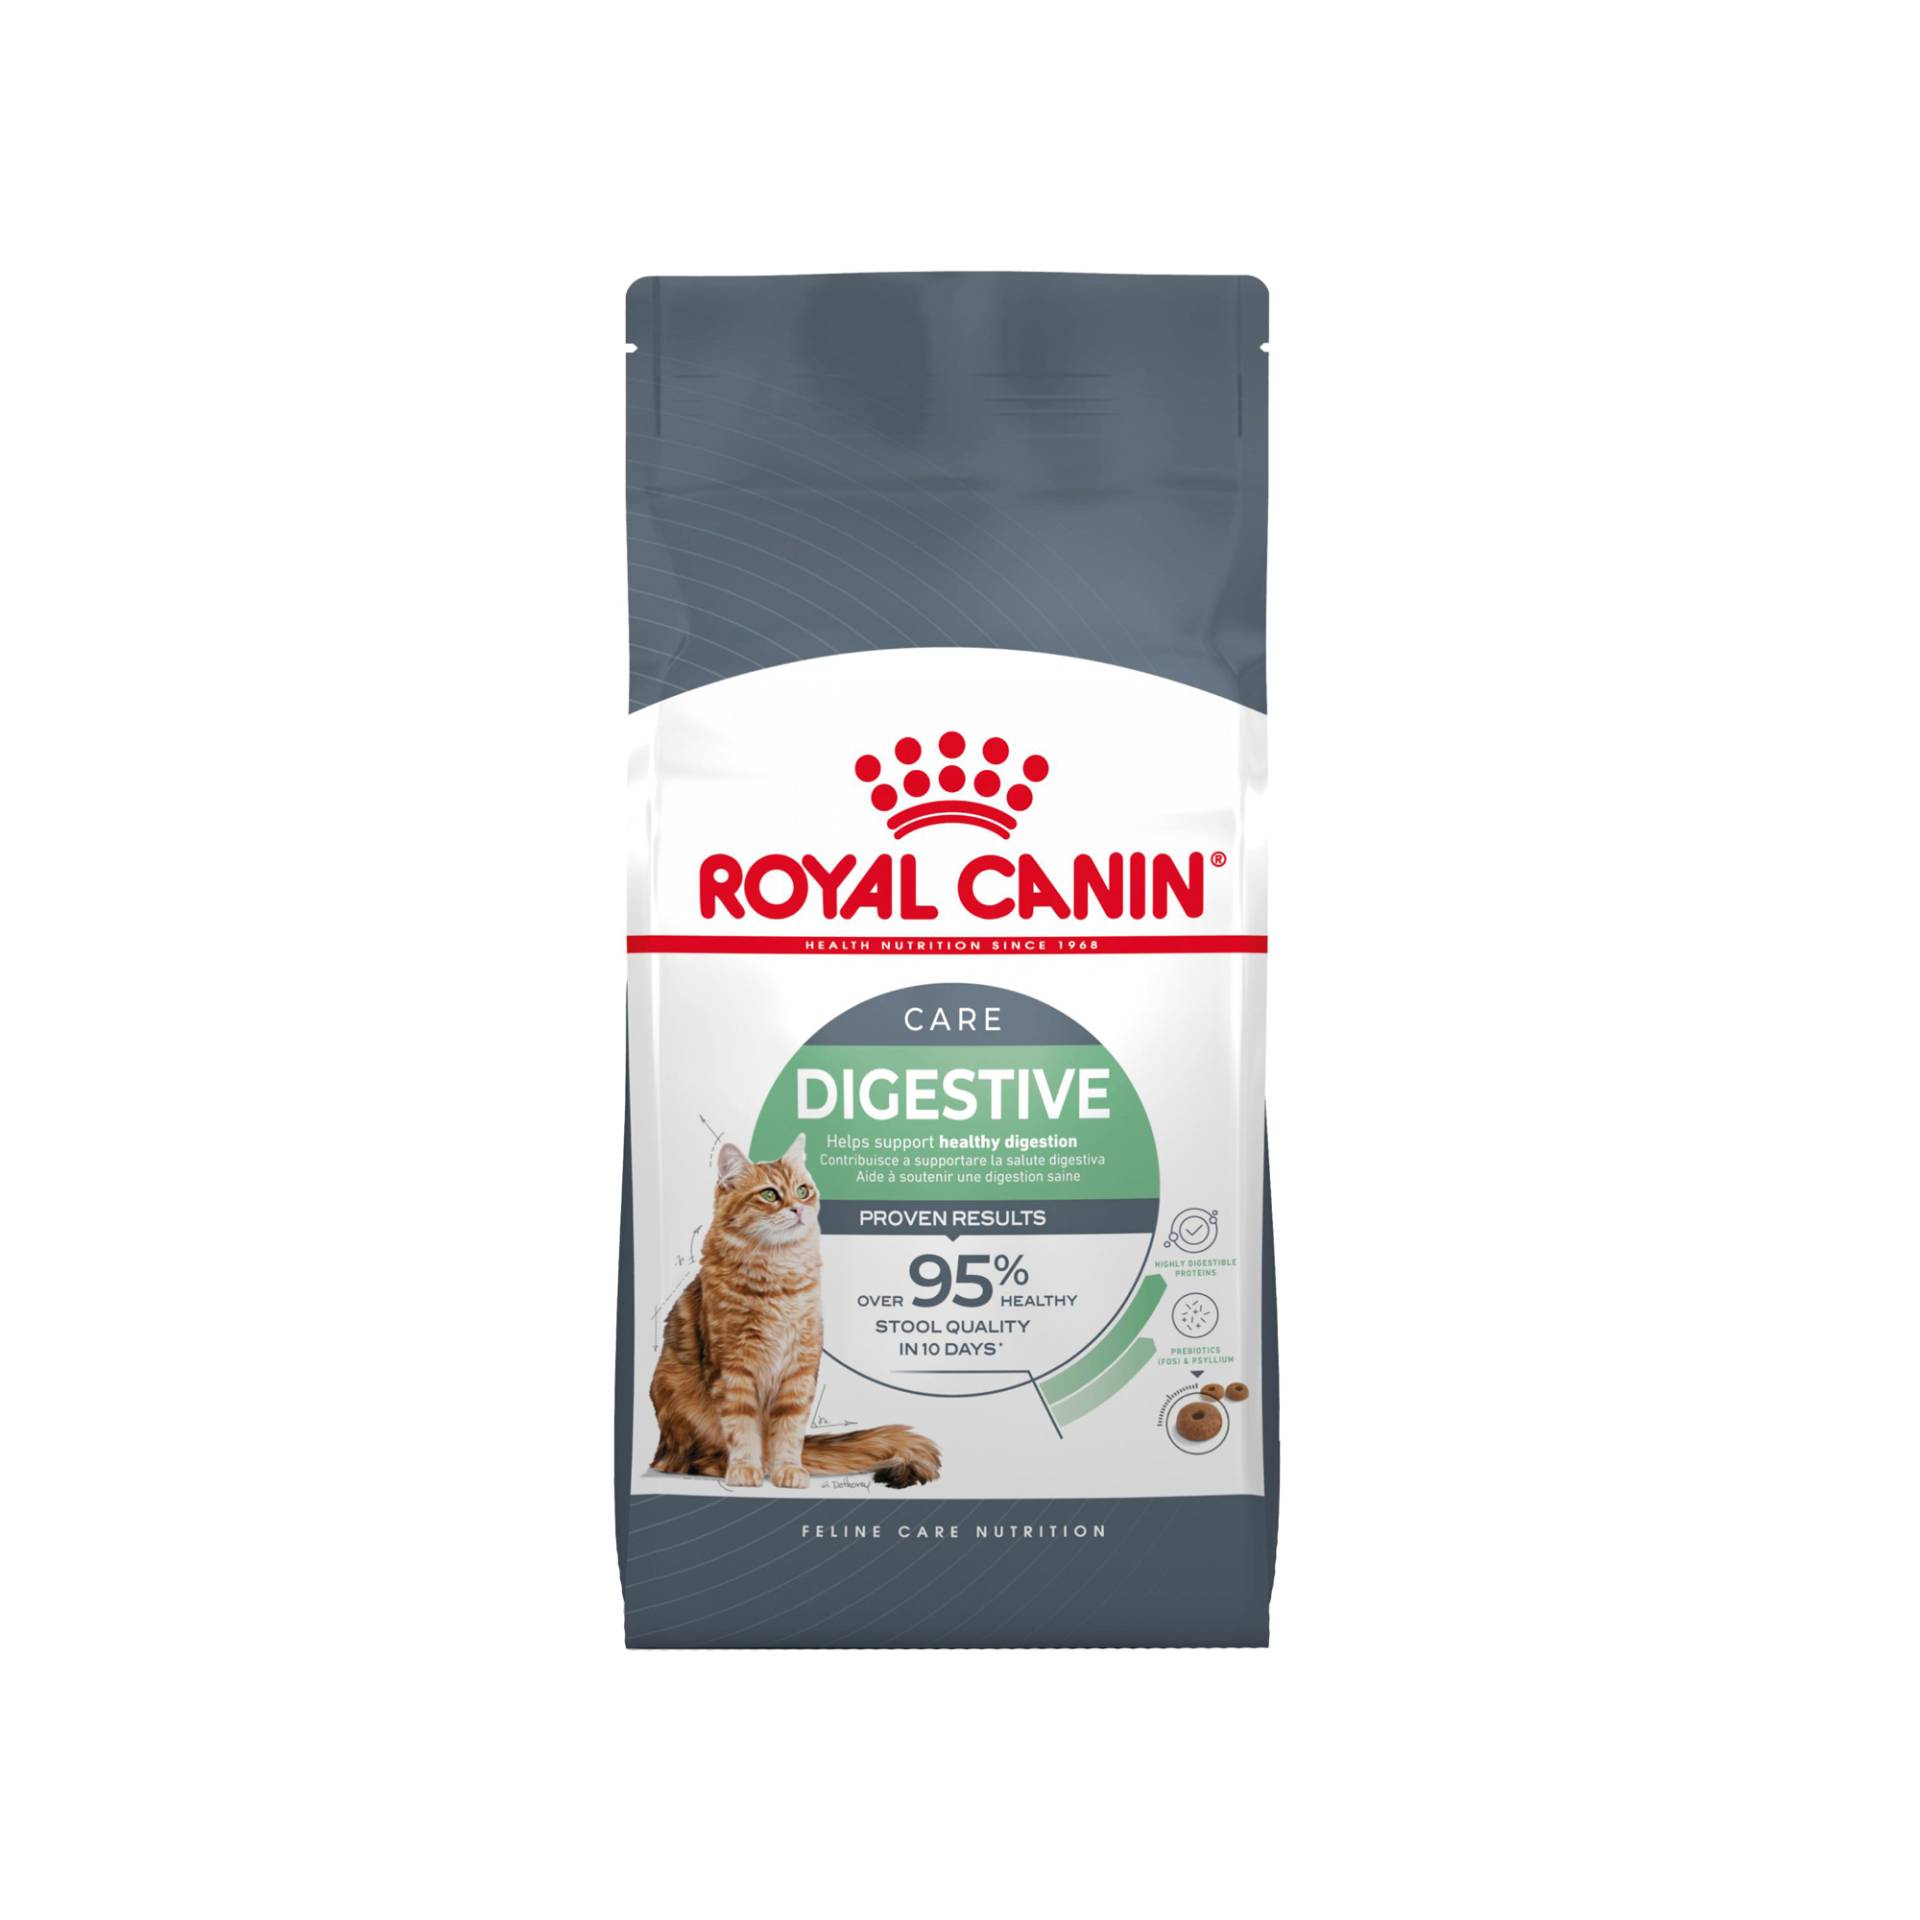 Royal Canin Digestive Care Katzenfutter - 10 kg von Royal Canin